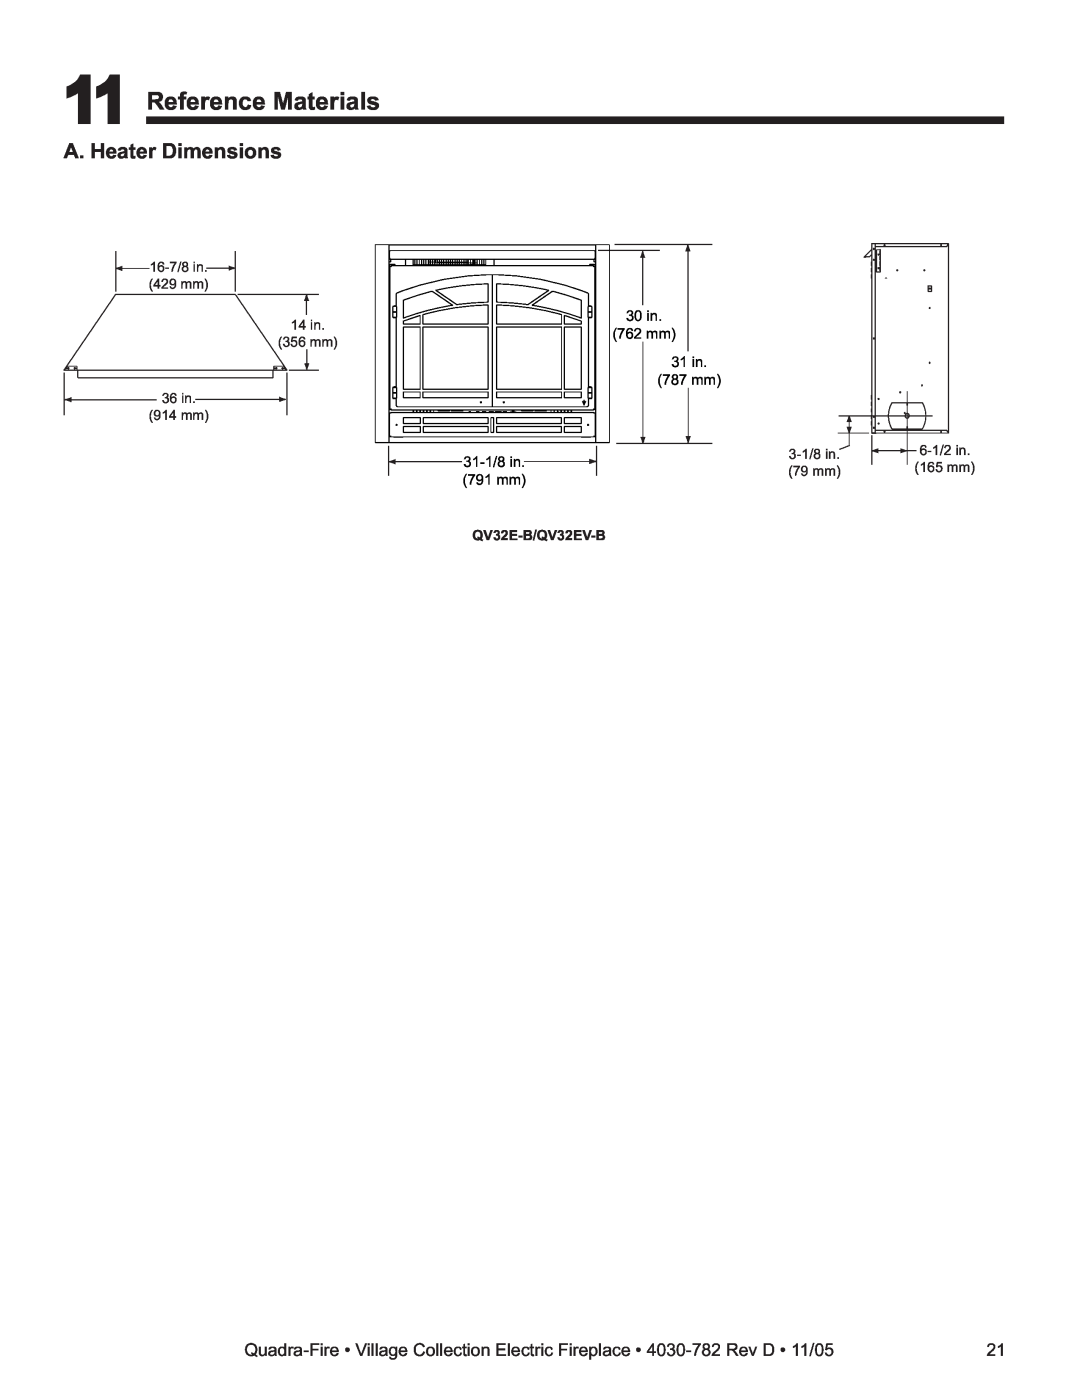 Quadra-Fire owner manual Reference Materials, A. Heater Dimensions, QV32E-B/QV32EV-B 